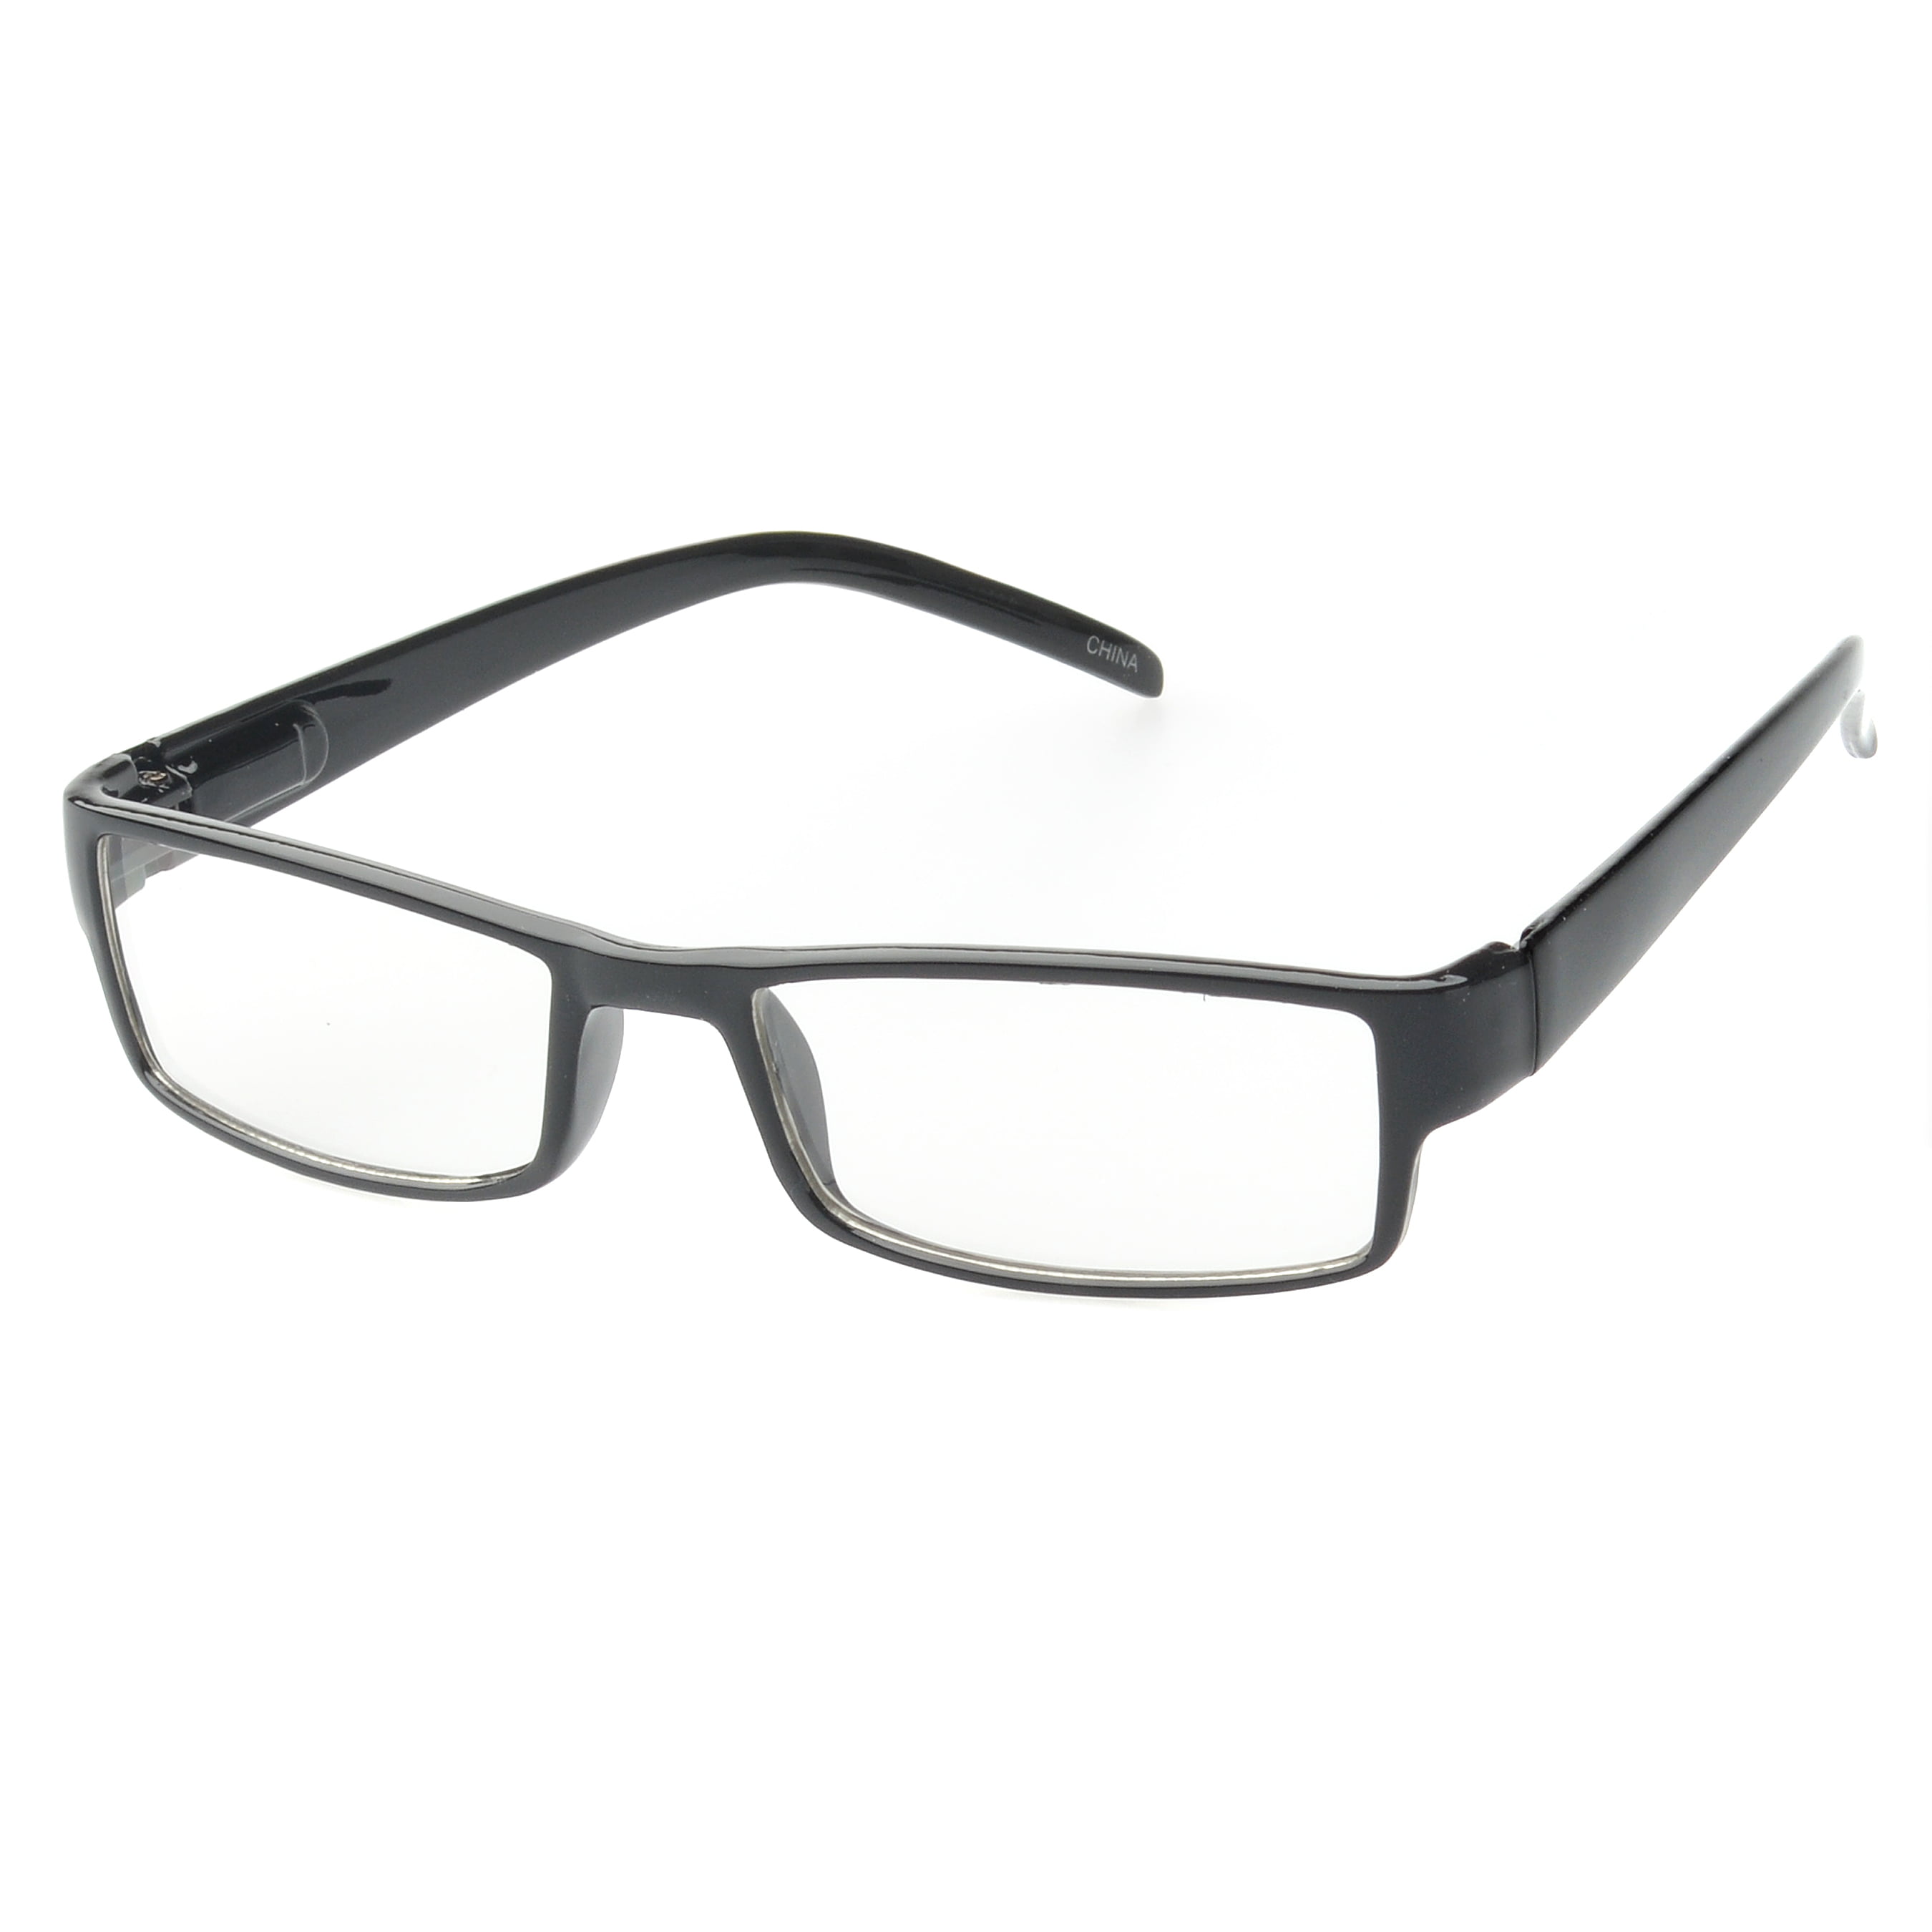 MLC Eyewear 'Norville' Rectangle Fashion Sunglasses in Black - Walmart.com